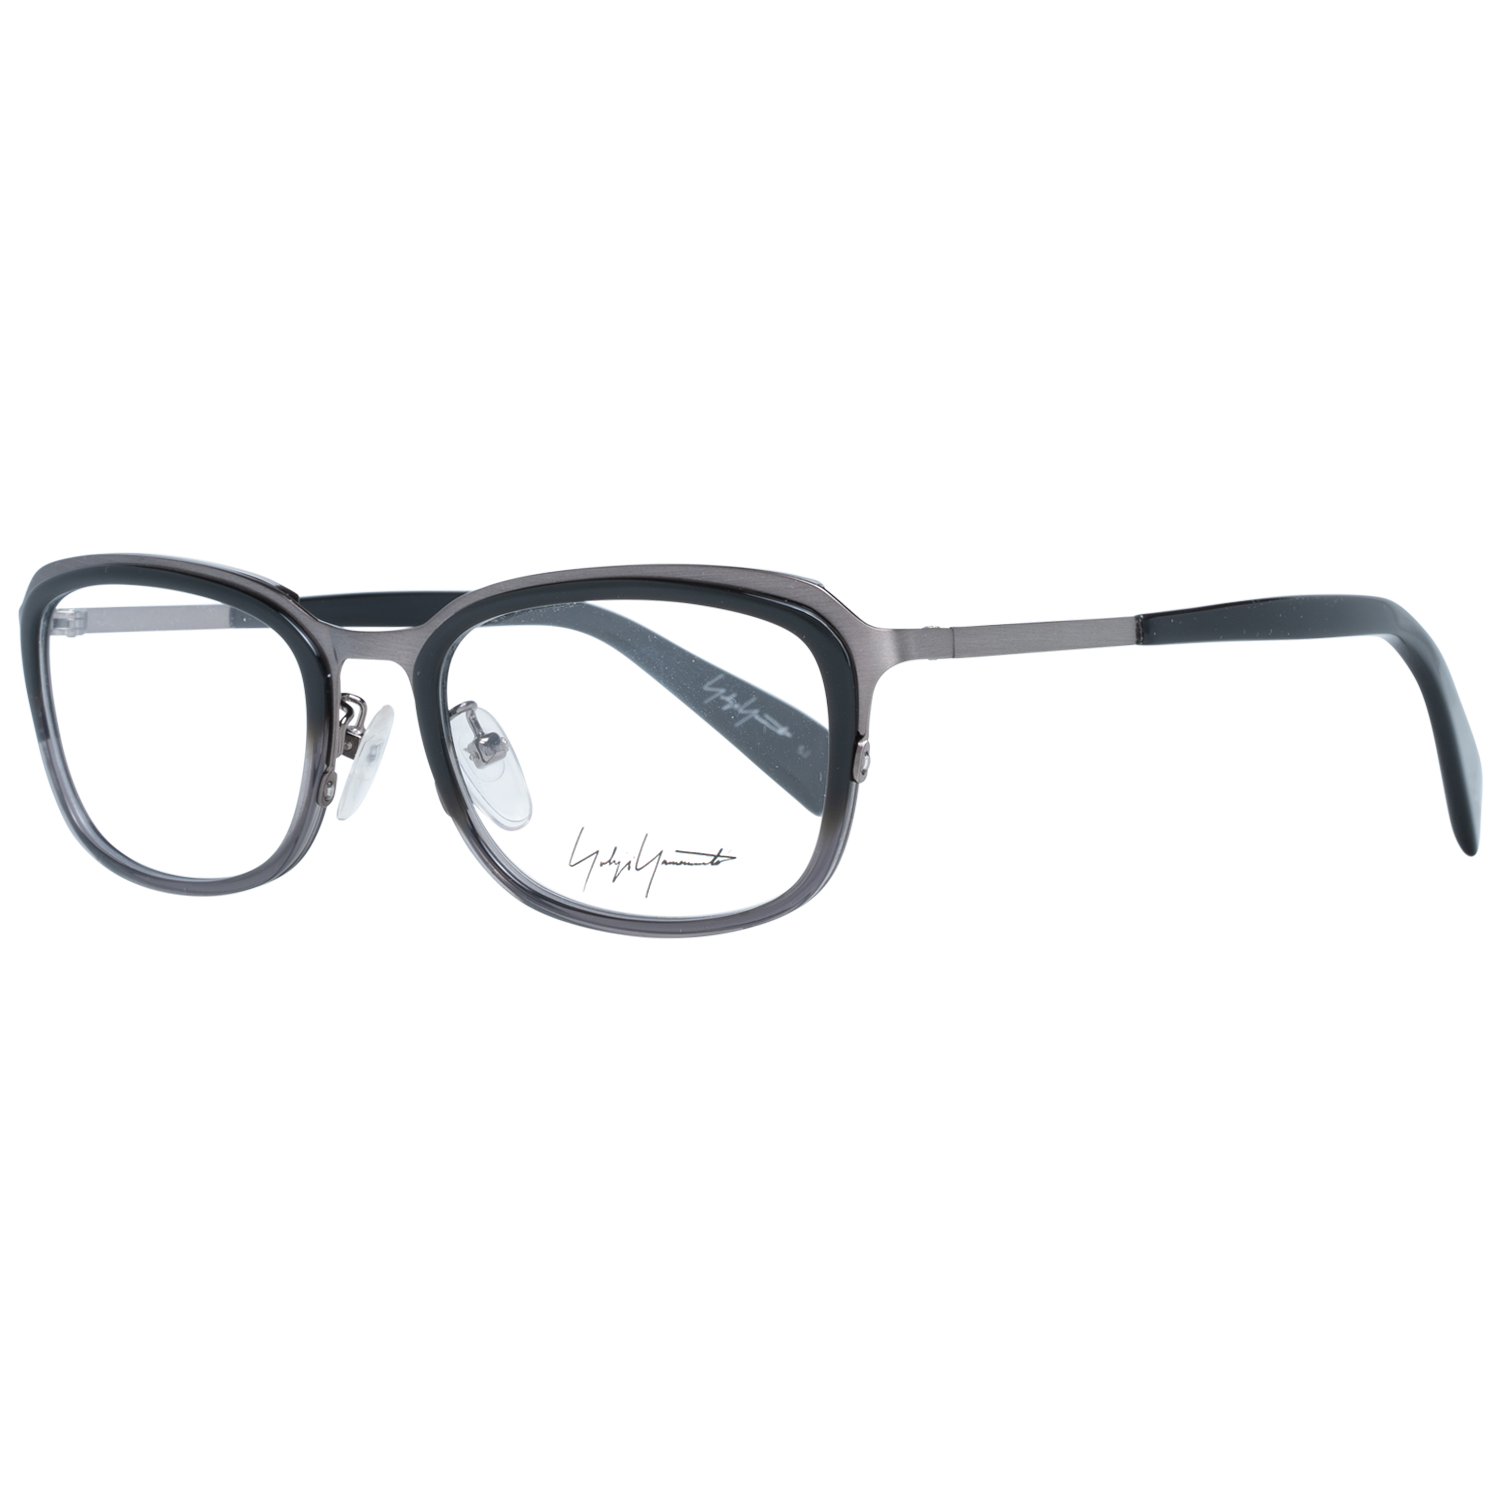 Yohji Yamamoto Frames Yohji Yamamoto Optical Frame YY1022 909 51 Eyeglasses Eyewear UK USA Australia 